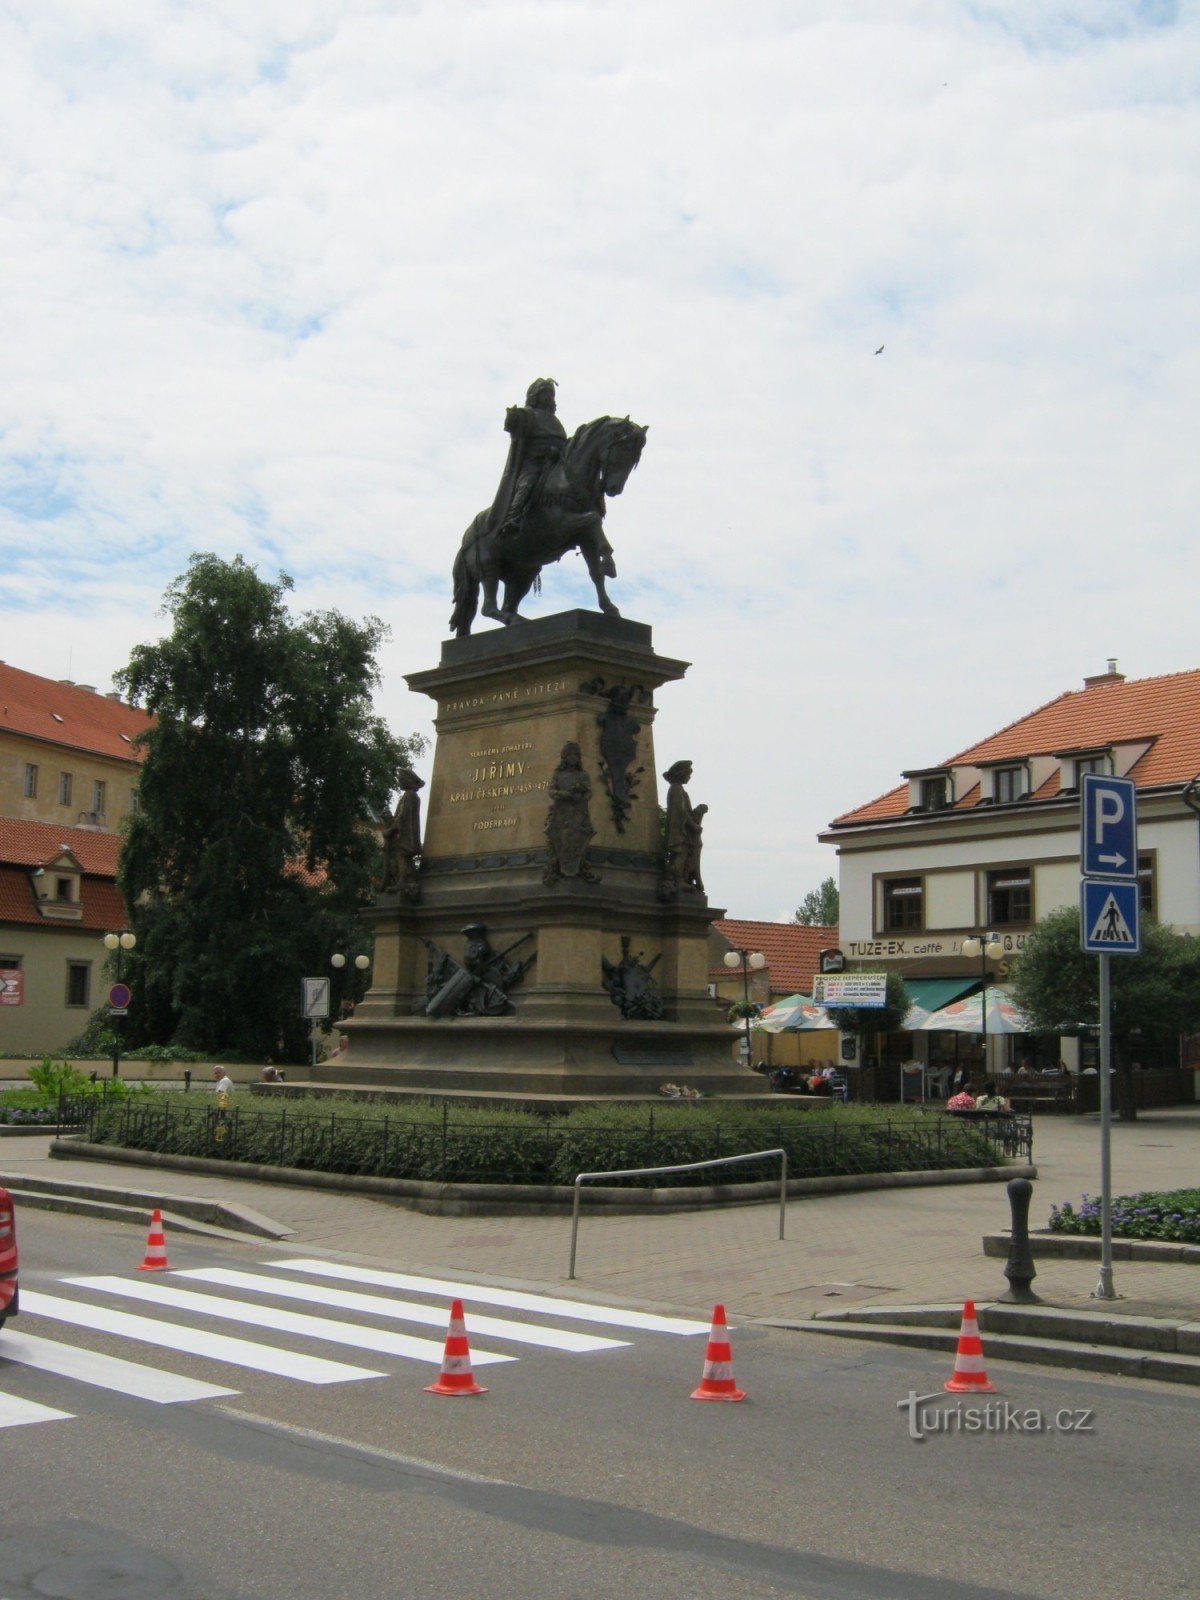 005 Estatua de Jorge en la plaza